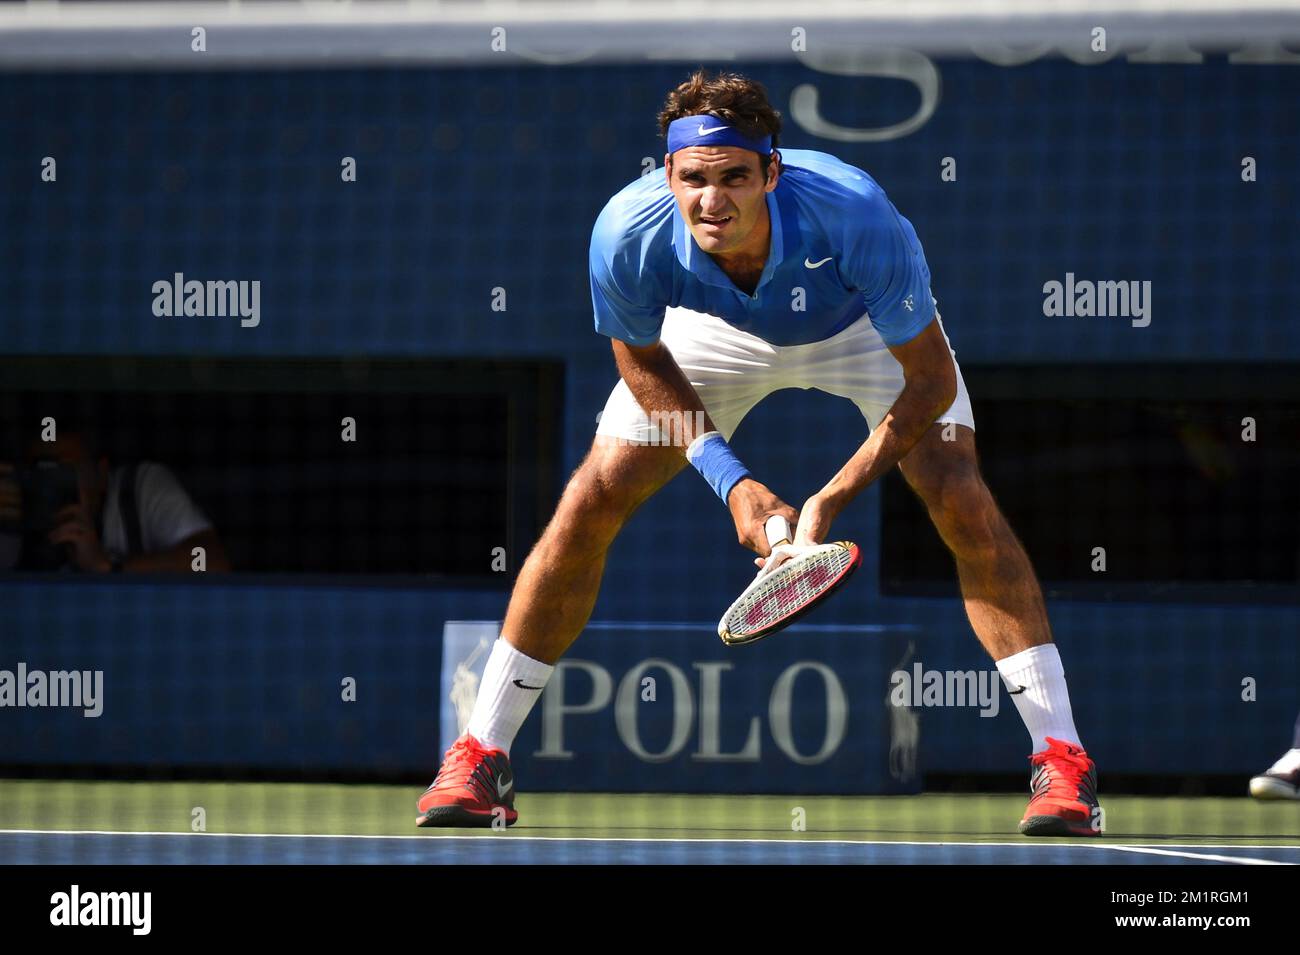 Swiss Roger Federer wurde am Dienstag, den 27. August 2013 beim US Open Grand Slam Tennis Turnier in Flushing Meadows in New York City, USA, fotografiert. Die US Open beginnen am 26. August 2013. Stockfoto